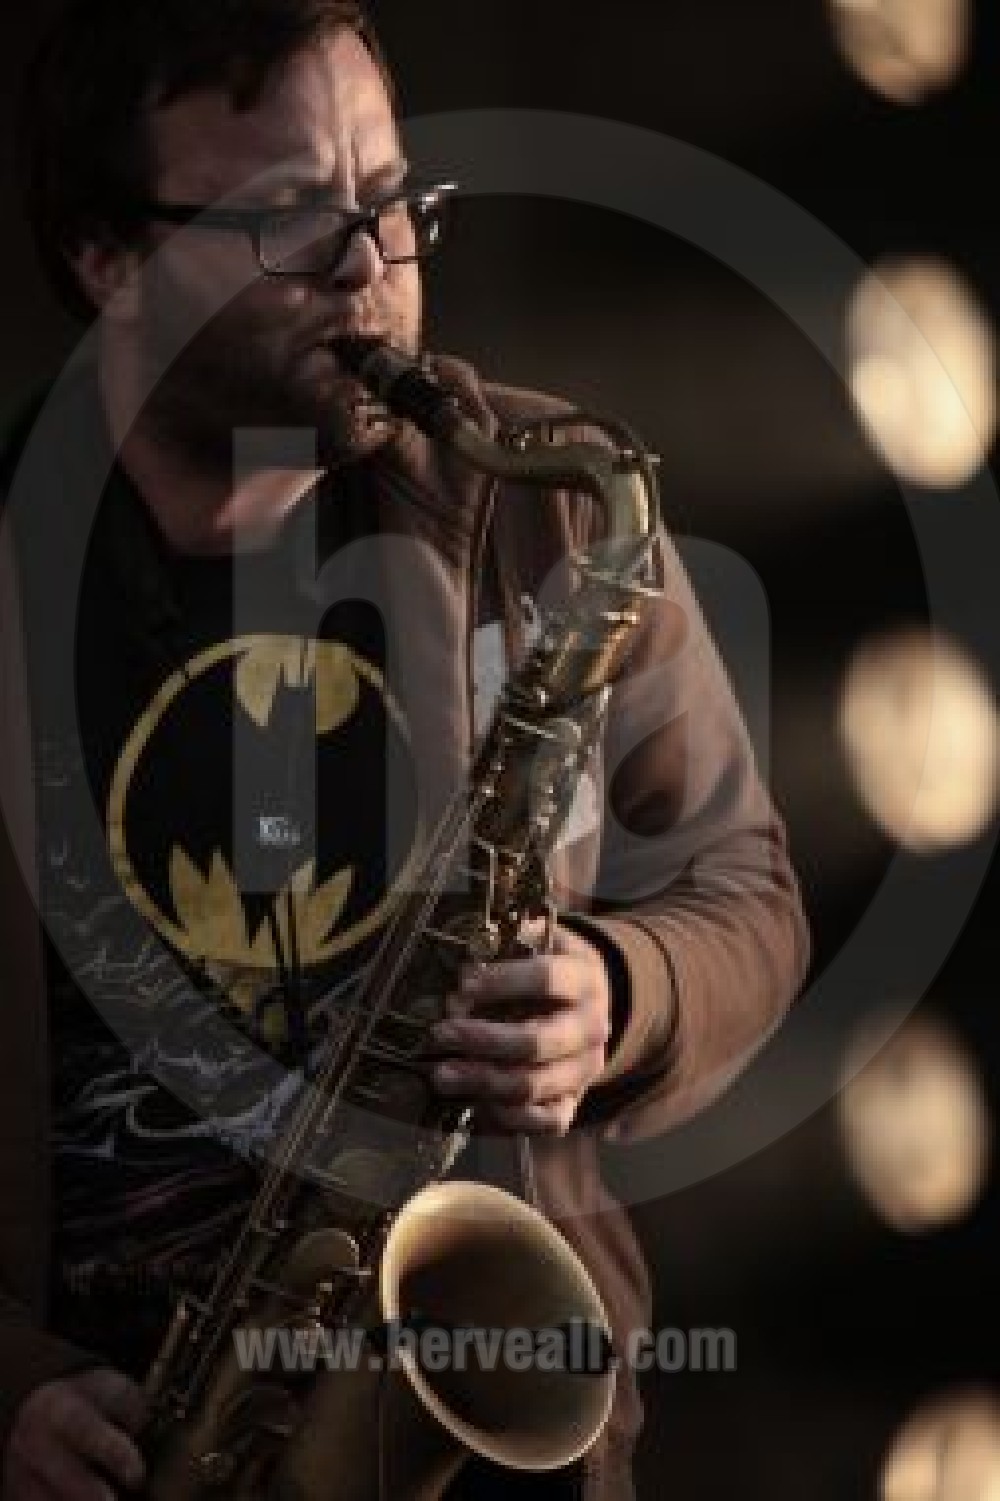 David Andrew Sitek plays saxophone